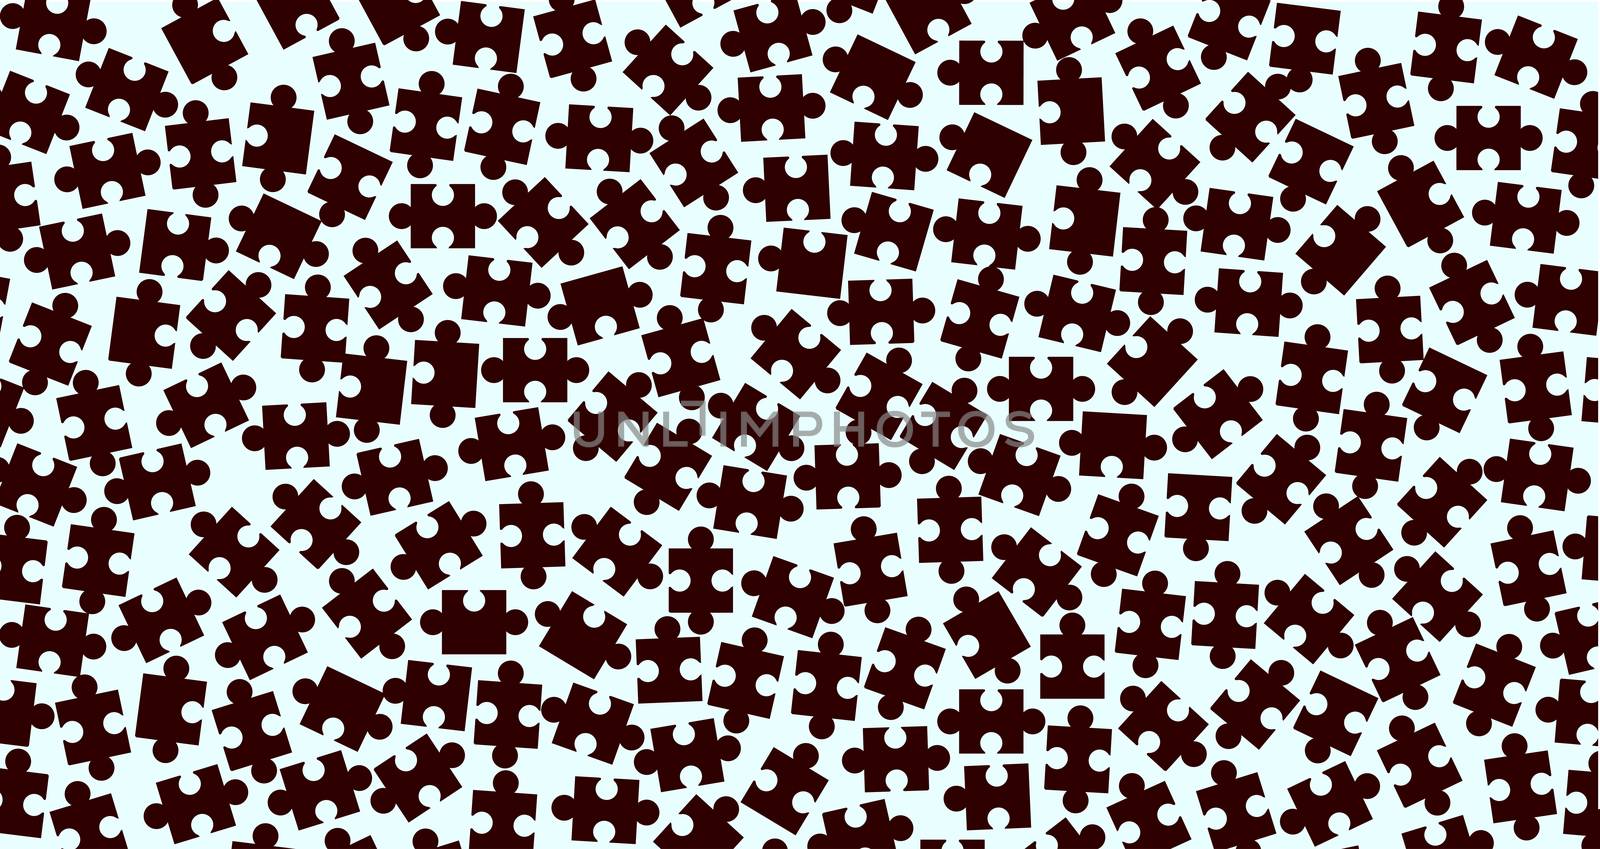 Random Jigsaw Pieces by Bigalbaloo